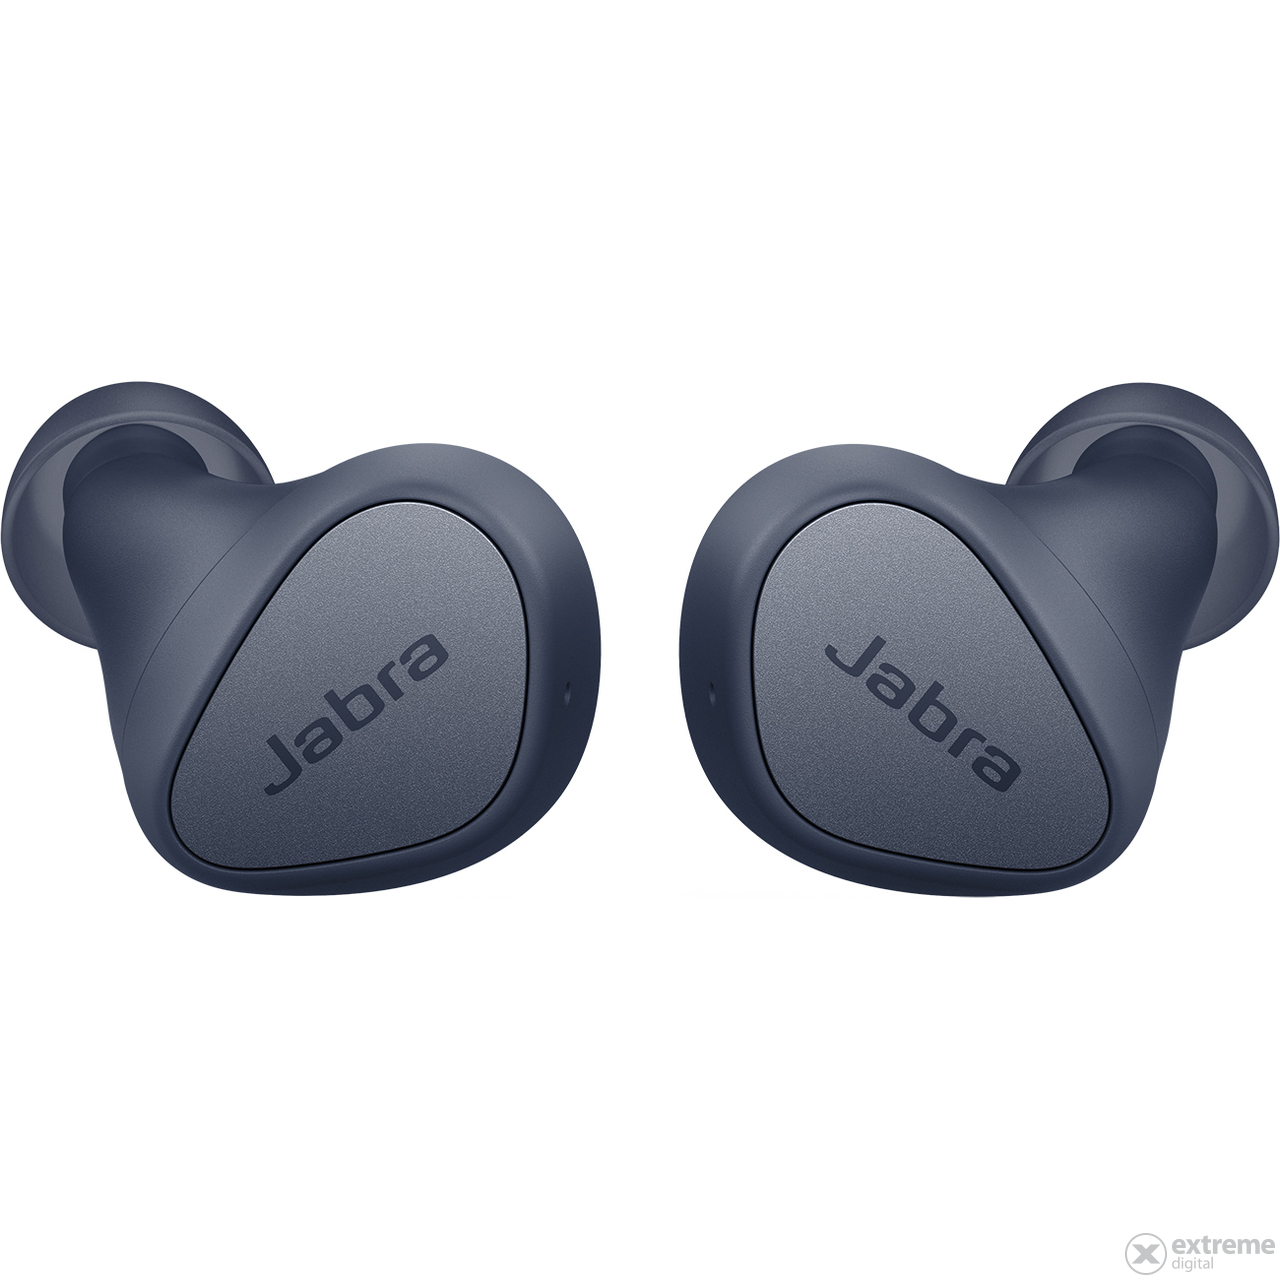 Jabra Elite 3 Bluetooth headset, Navy